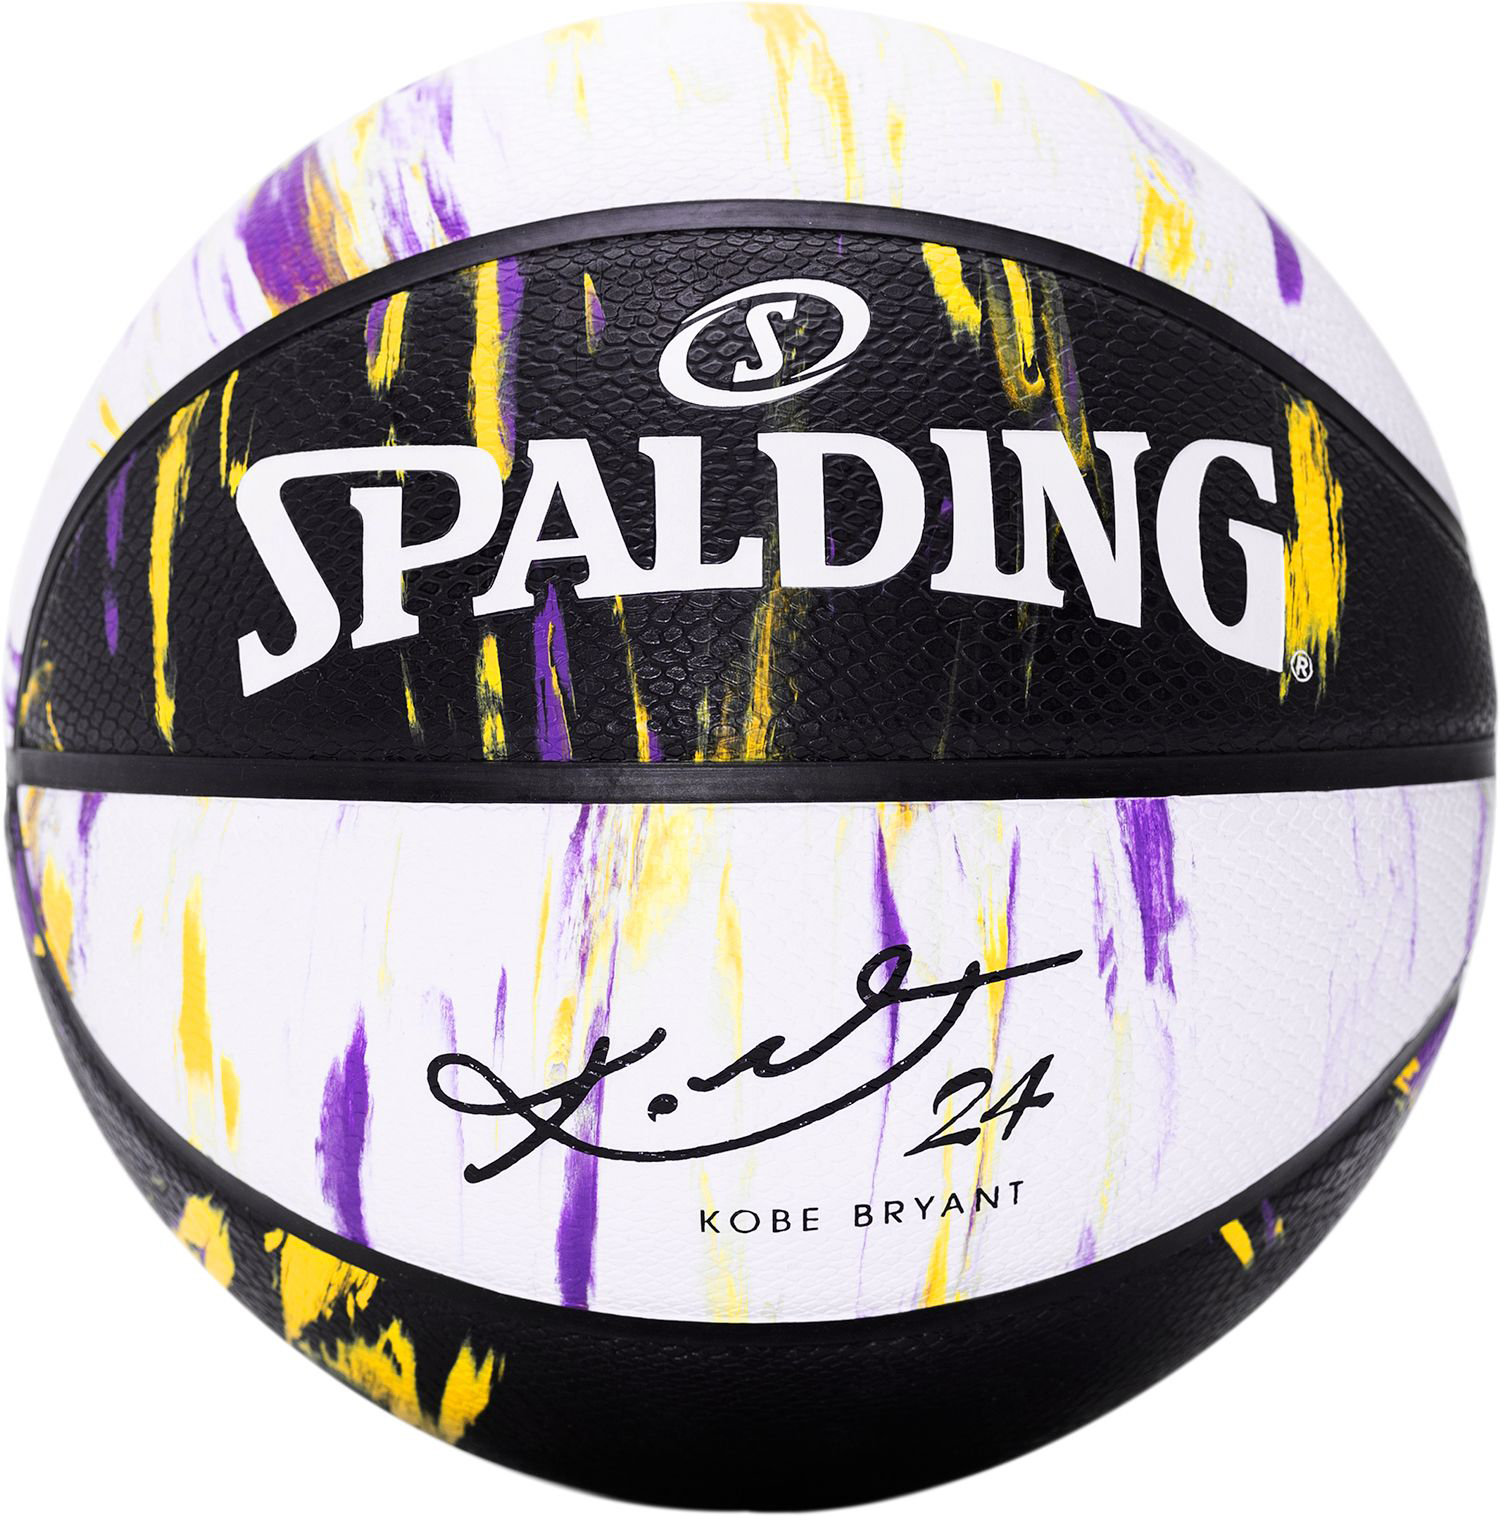 Spalding Kobe Bryant 24 Marbled Snake Limited Edition Basketball for sale online 